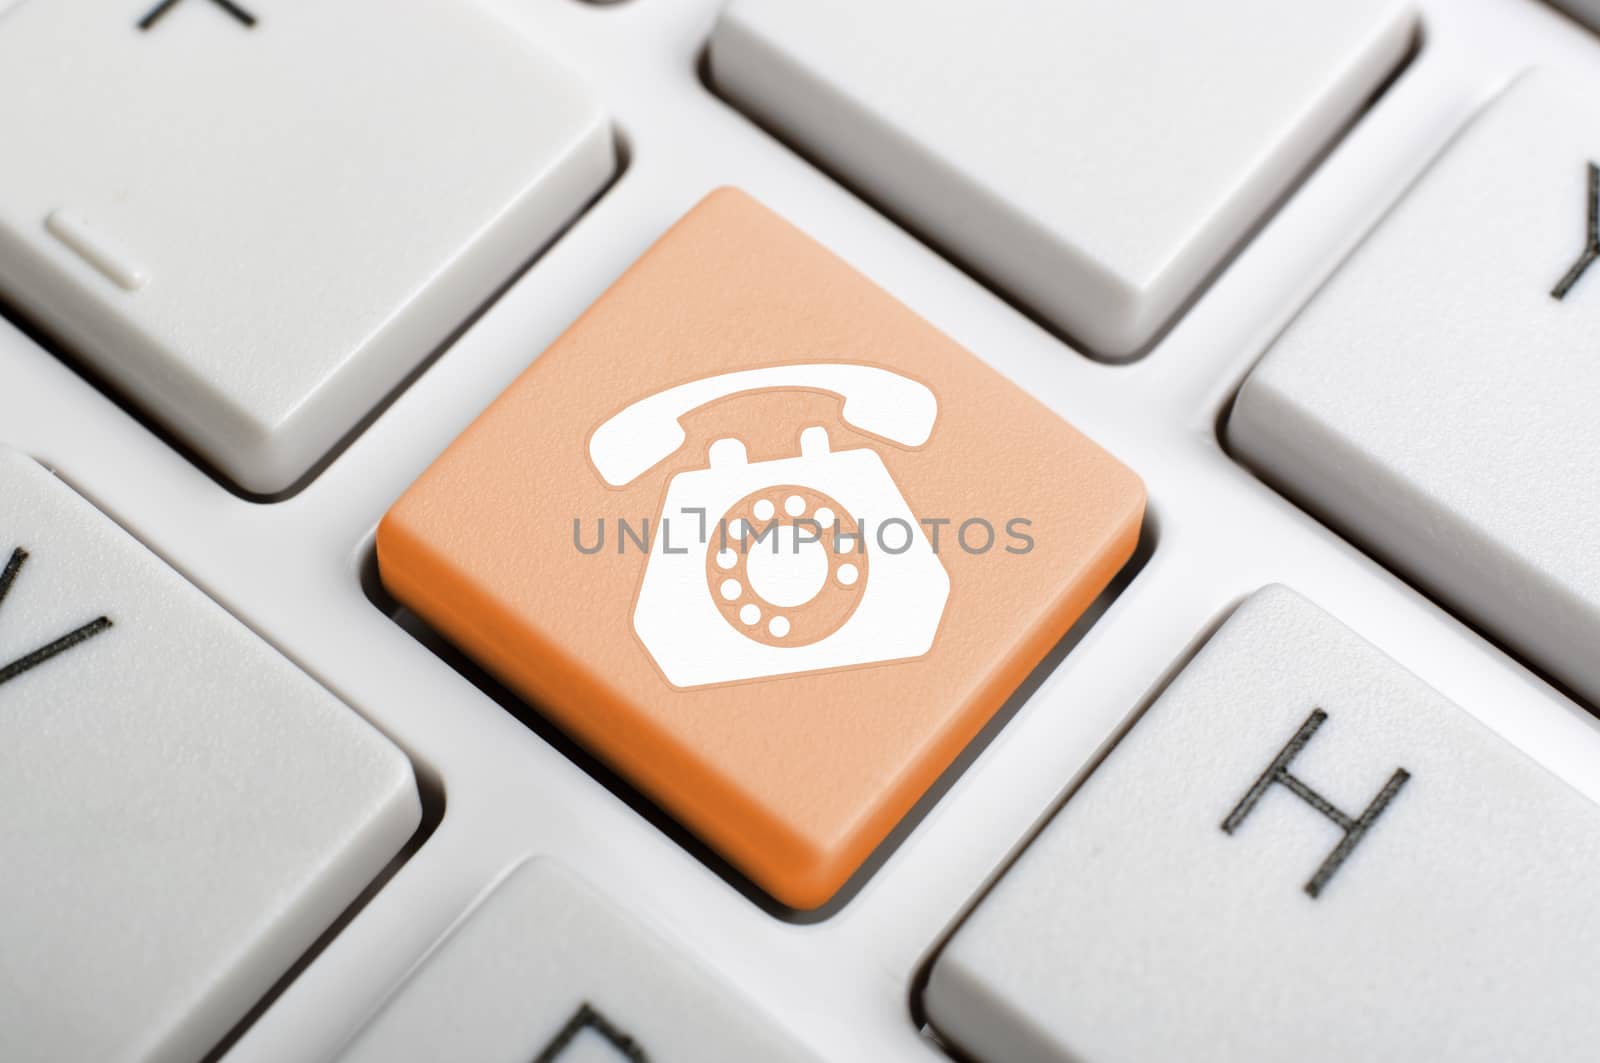 Orange phone key on keyboard